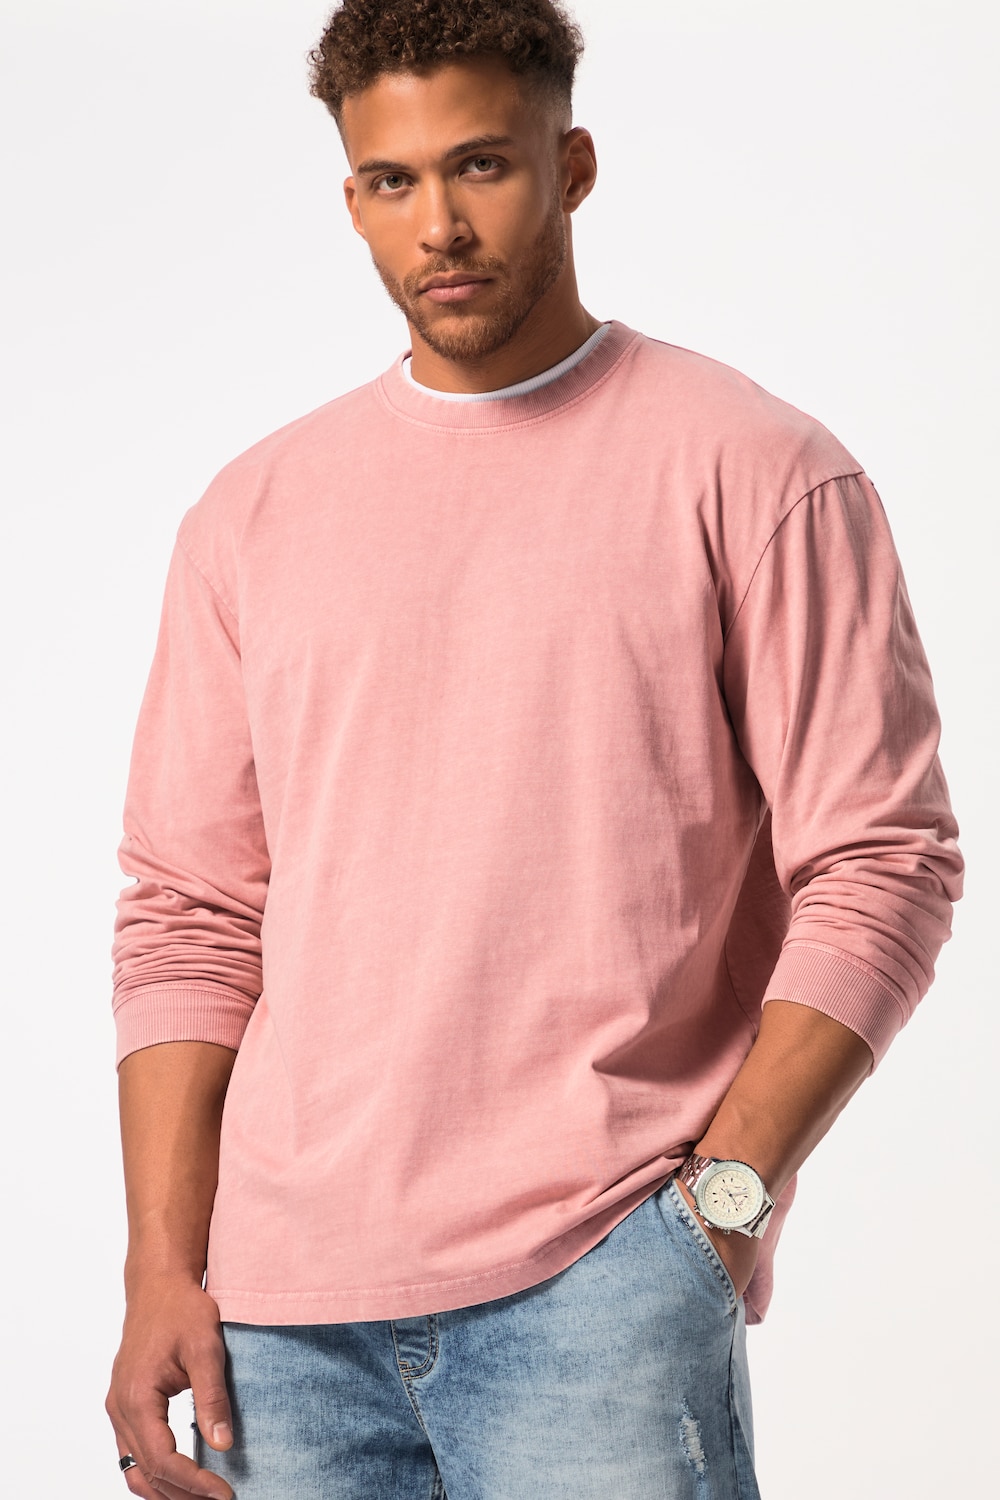 Grote Maten STHUGE shirt met lange mouwenmale, roze, Maat: 4XL, Katoen, STHUGE